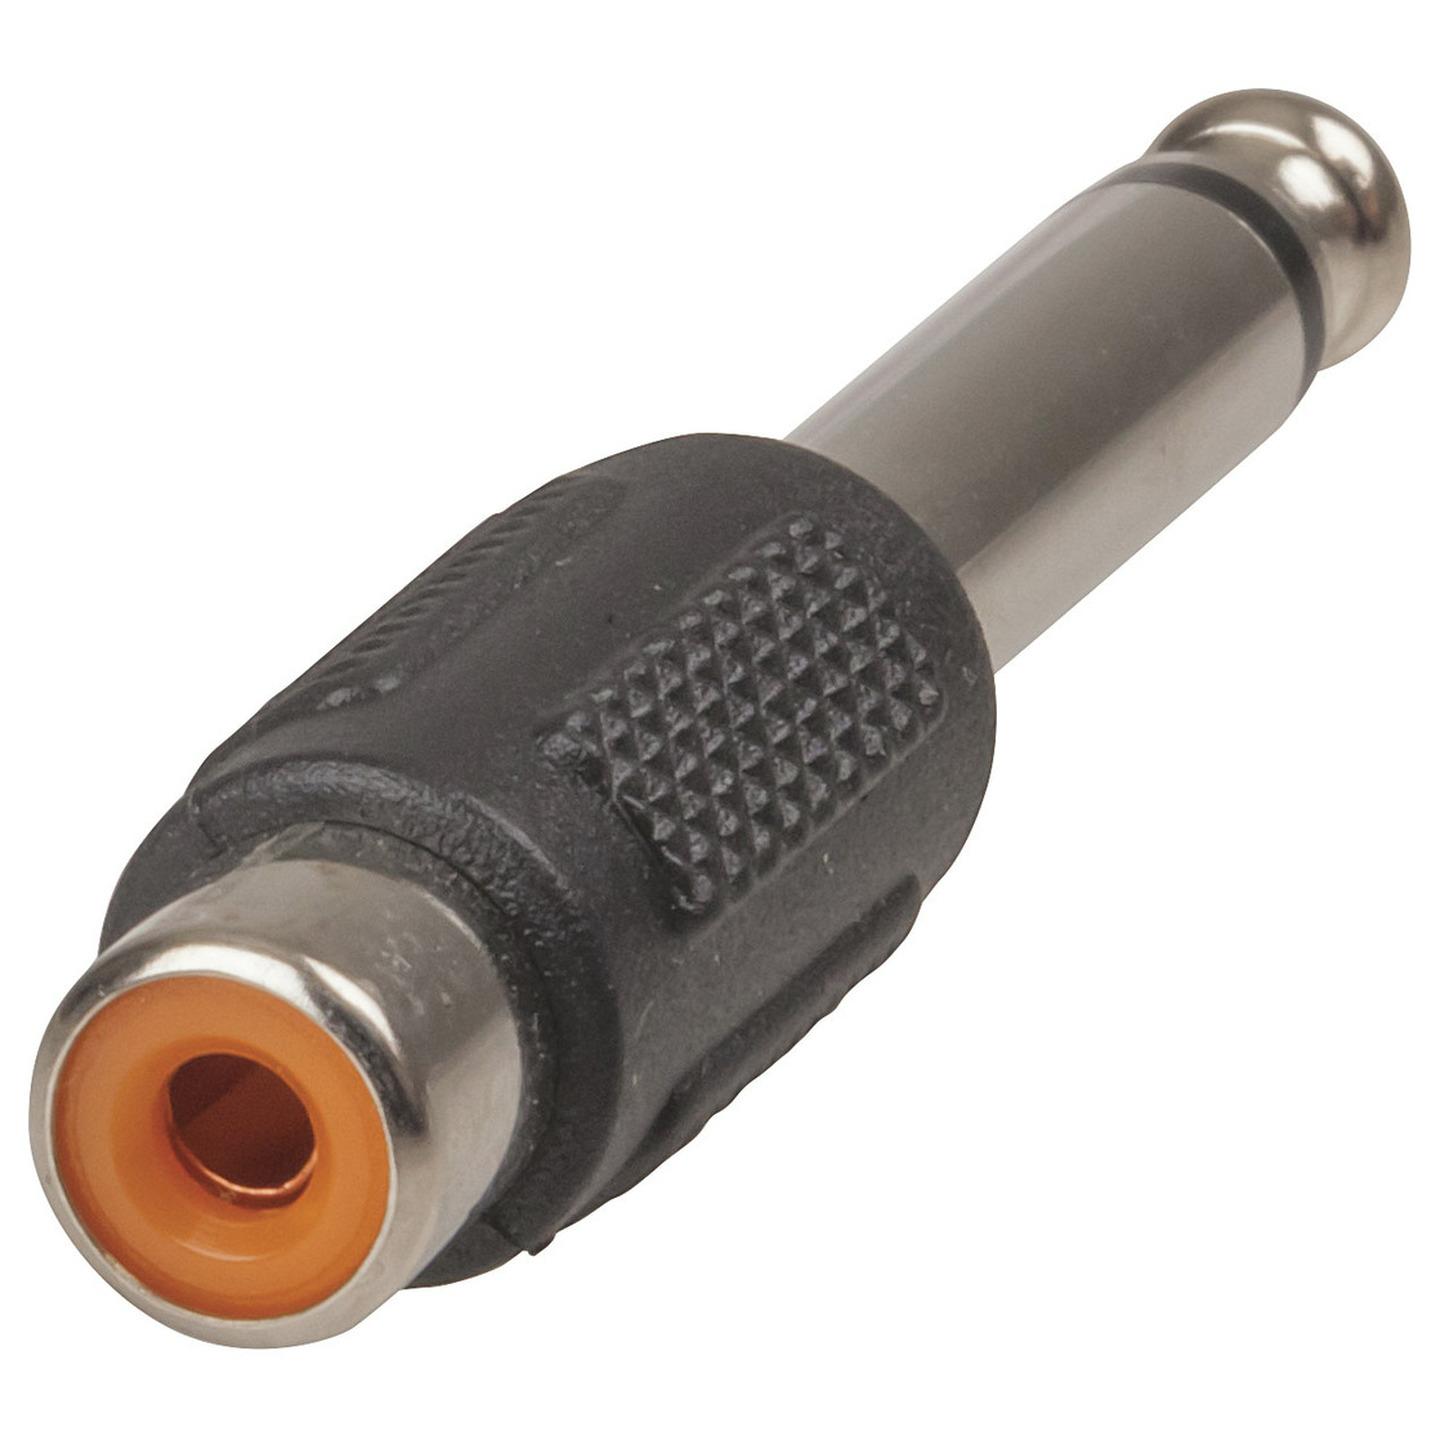 6.5mm Mono Plug to RCA Socket Adaptor